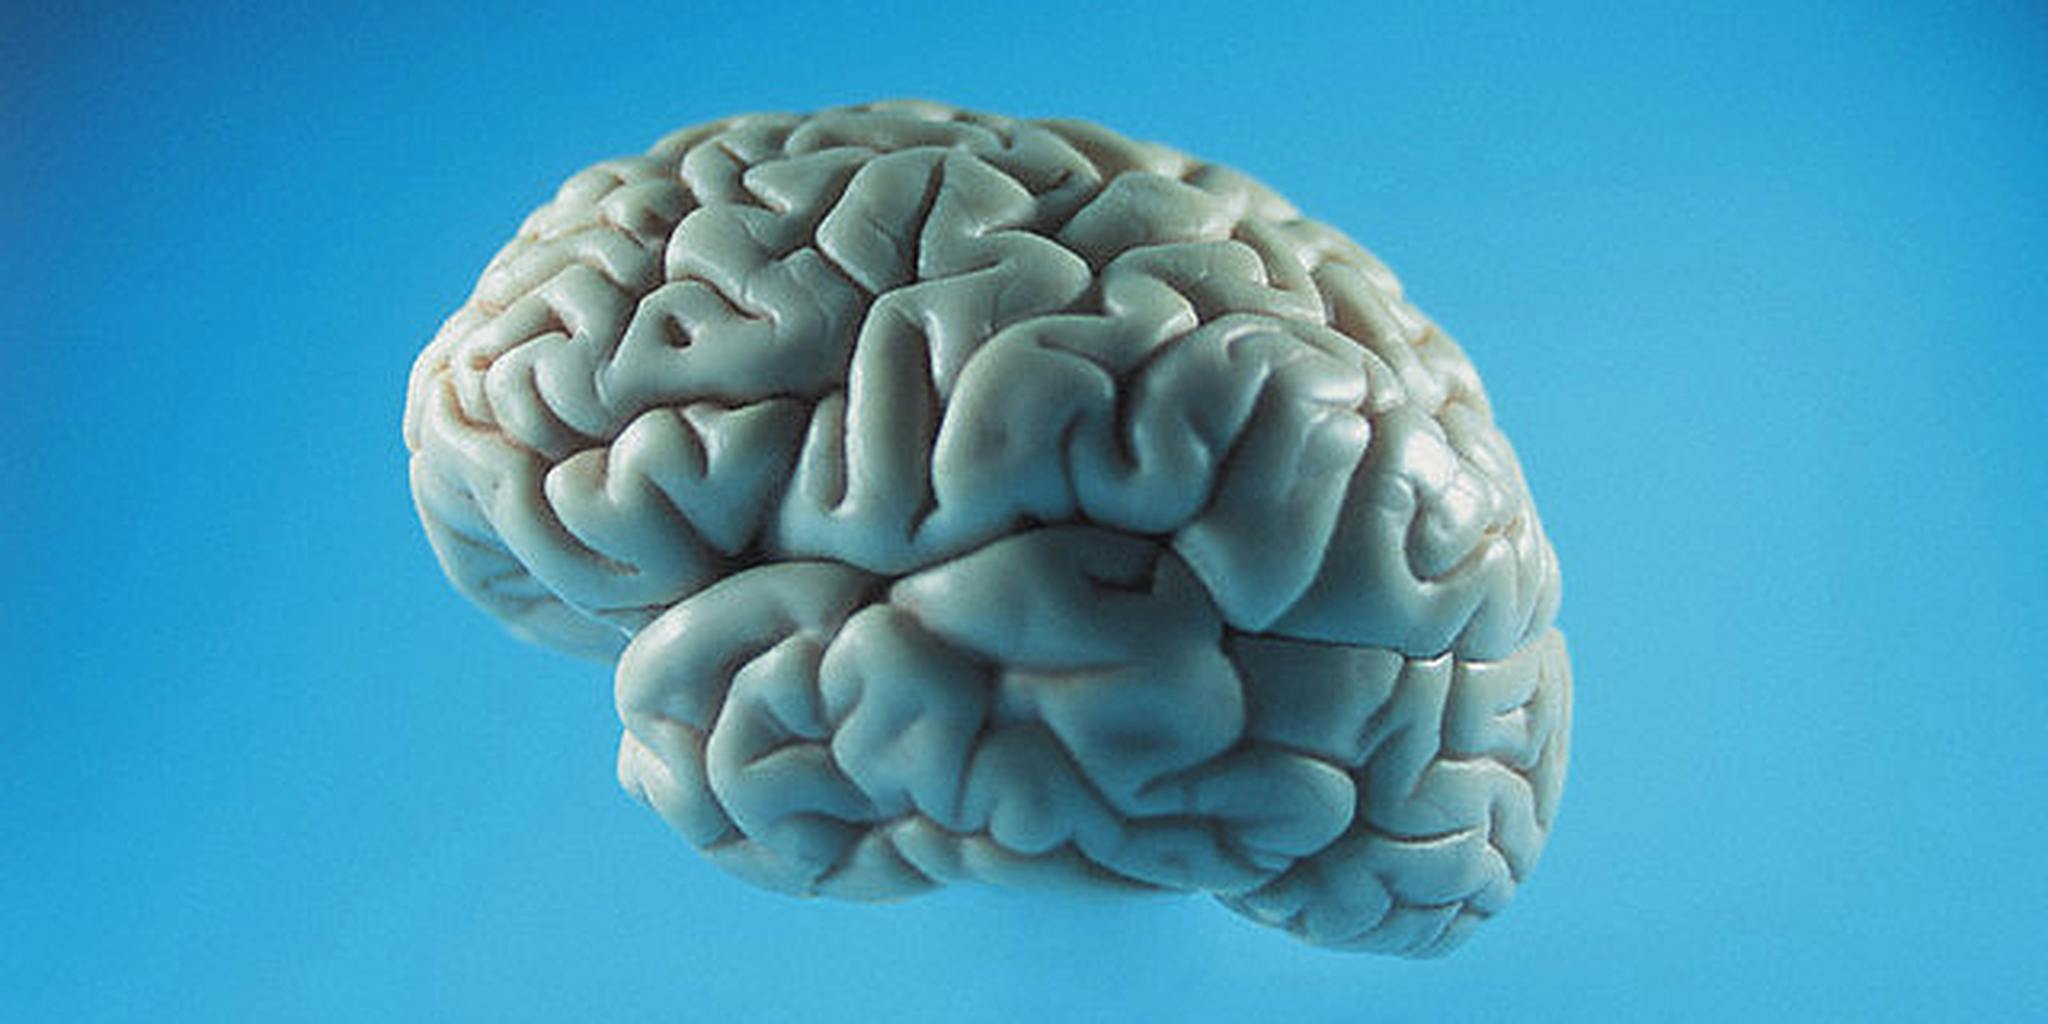 Brain 63. Цветок похожий на мозг. Мозг похожий на губку. Облака похожие на мозг. Животное похожее на мозг в биологии.